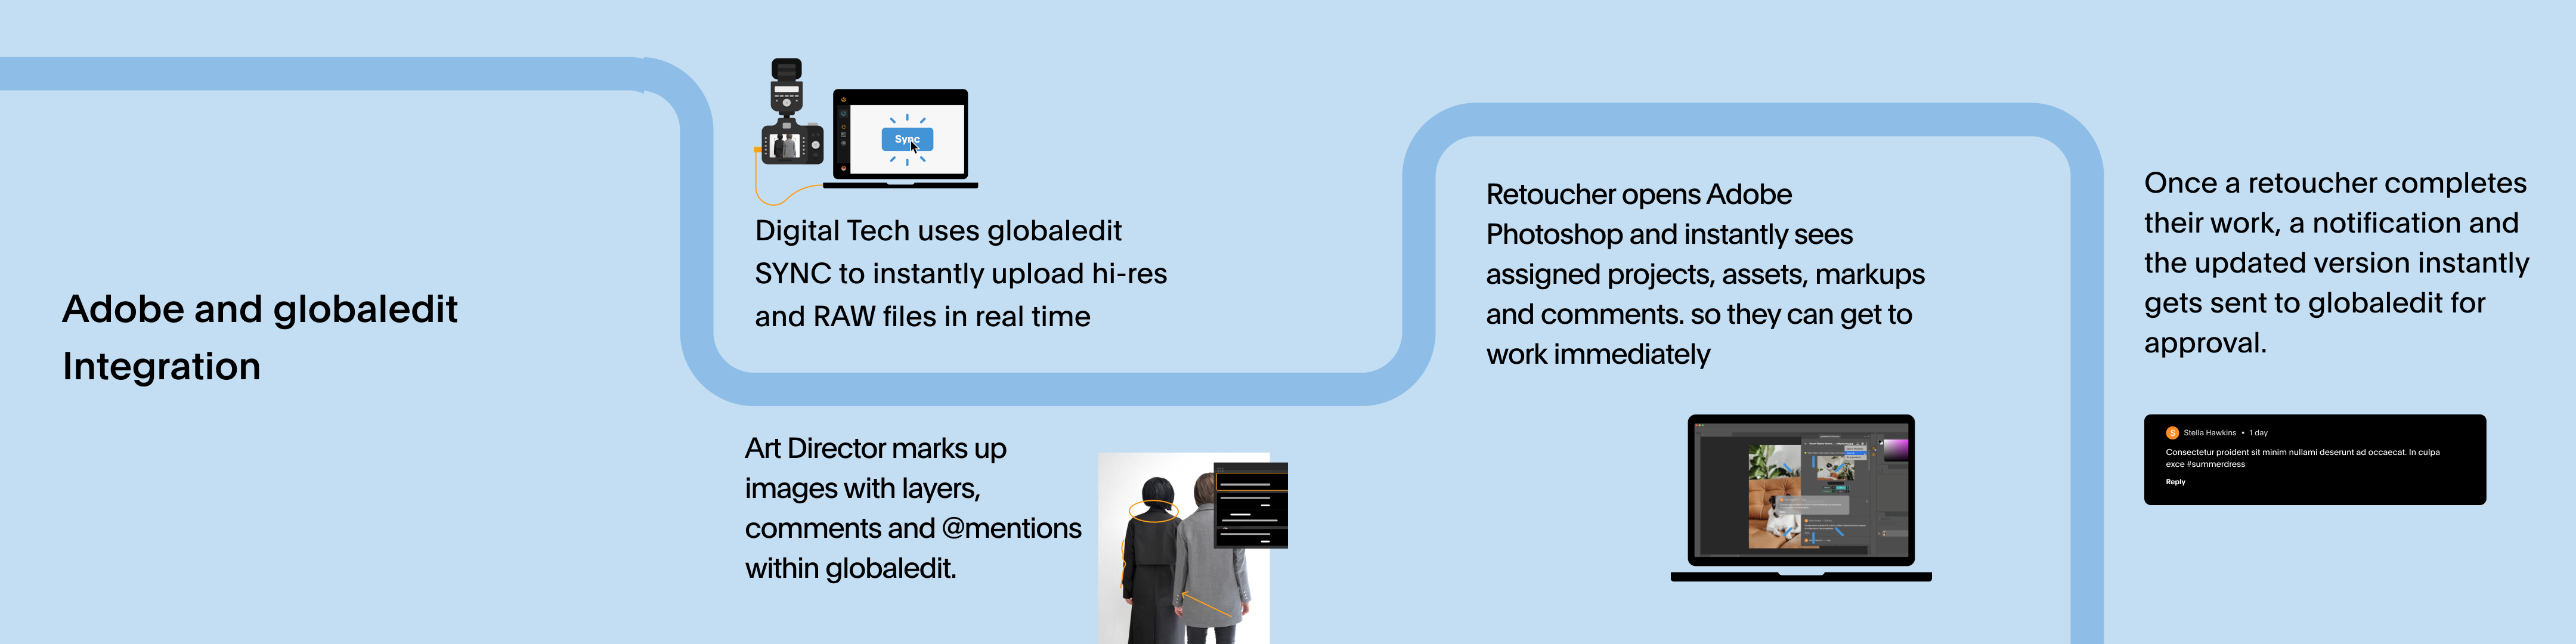 Announcing: The globaledit integration with Adobe Photoshop, globaledit®